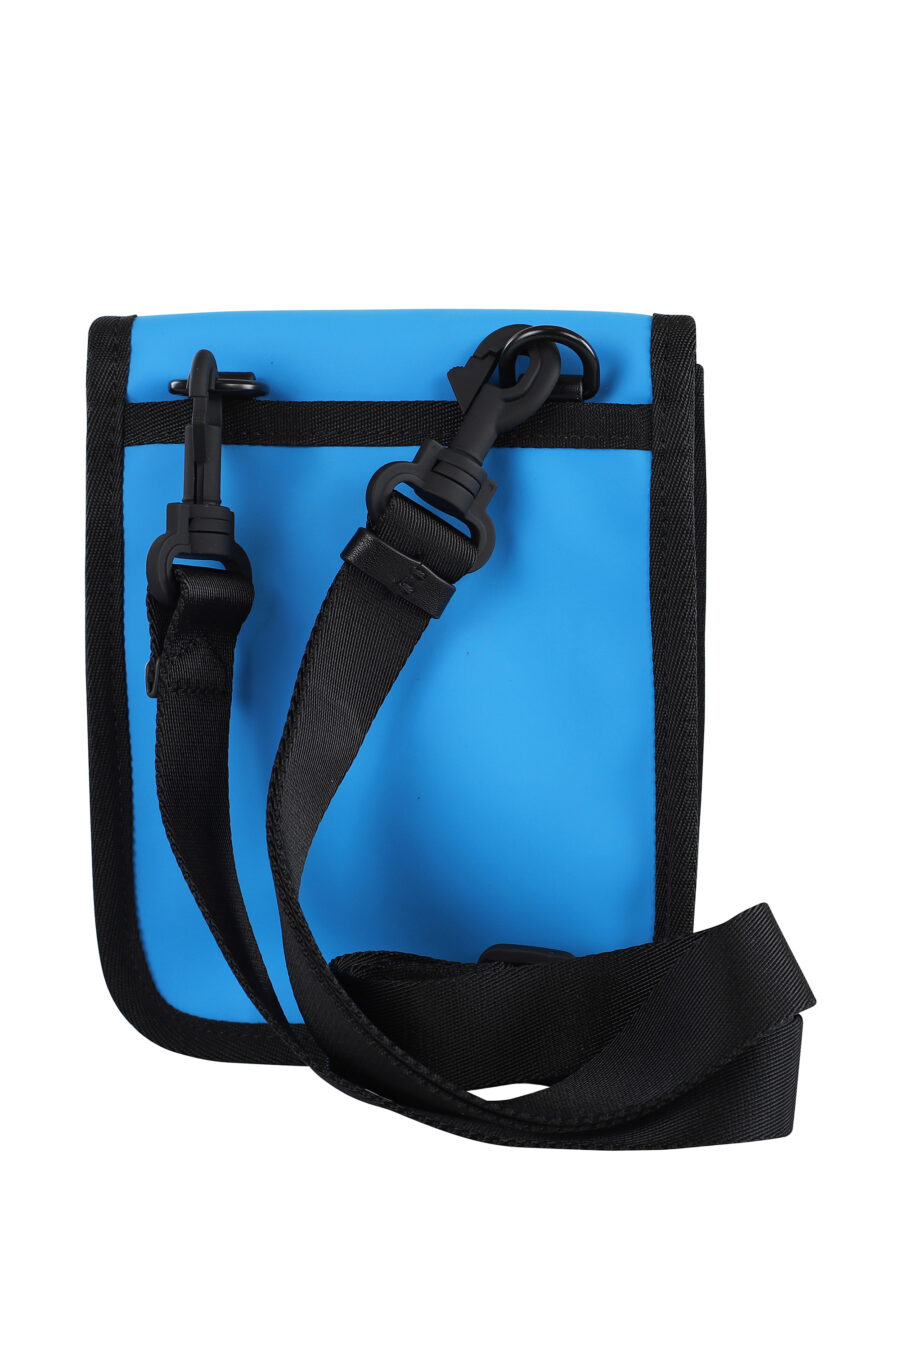 Bolso bandolera azul con logo negro - IMG 7004